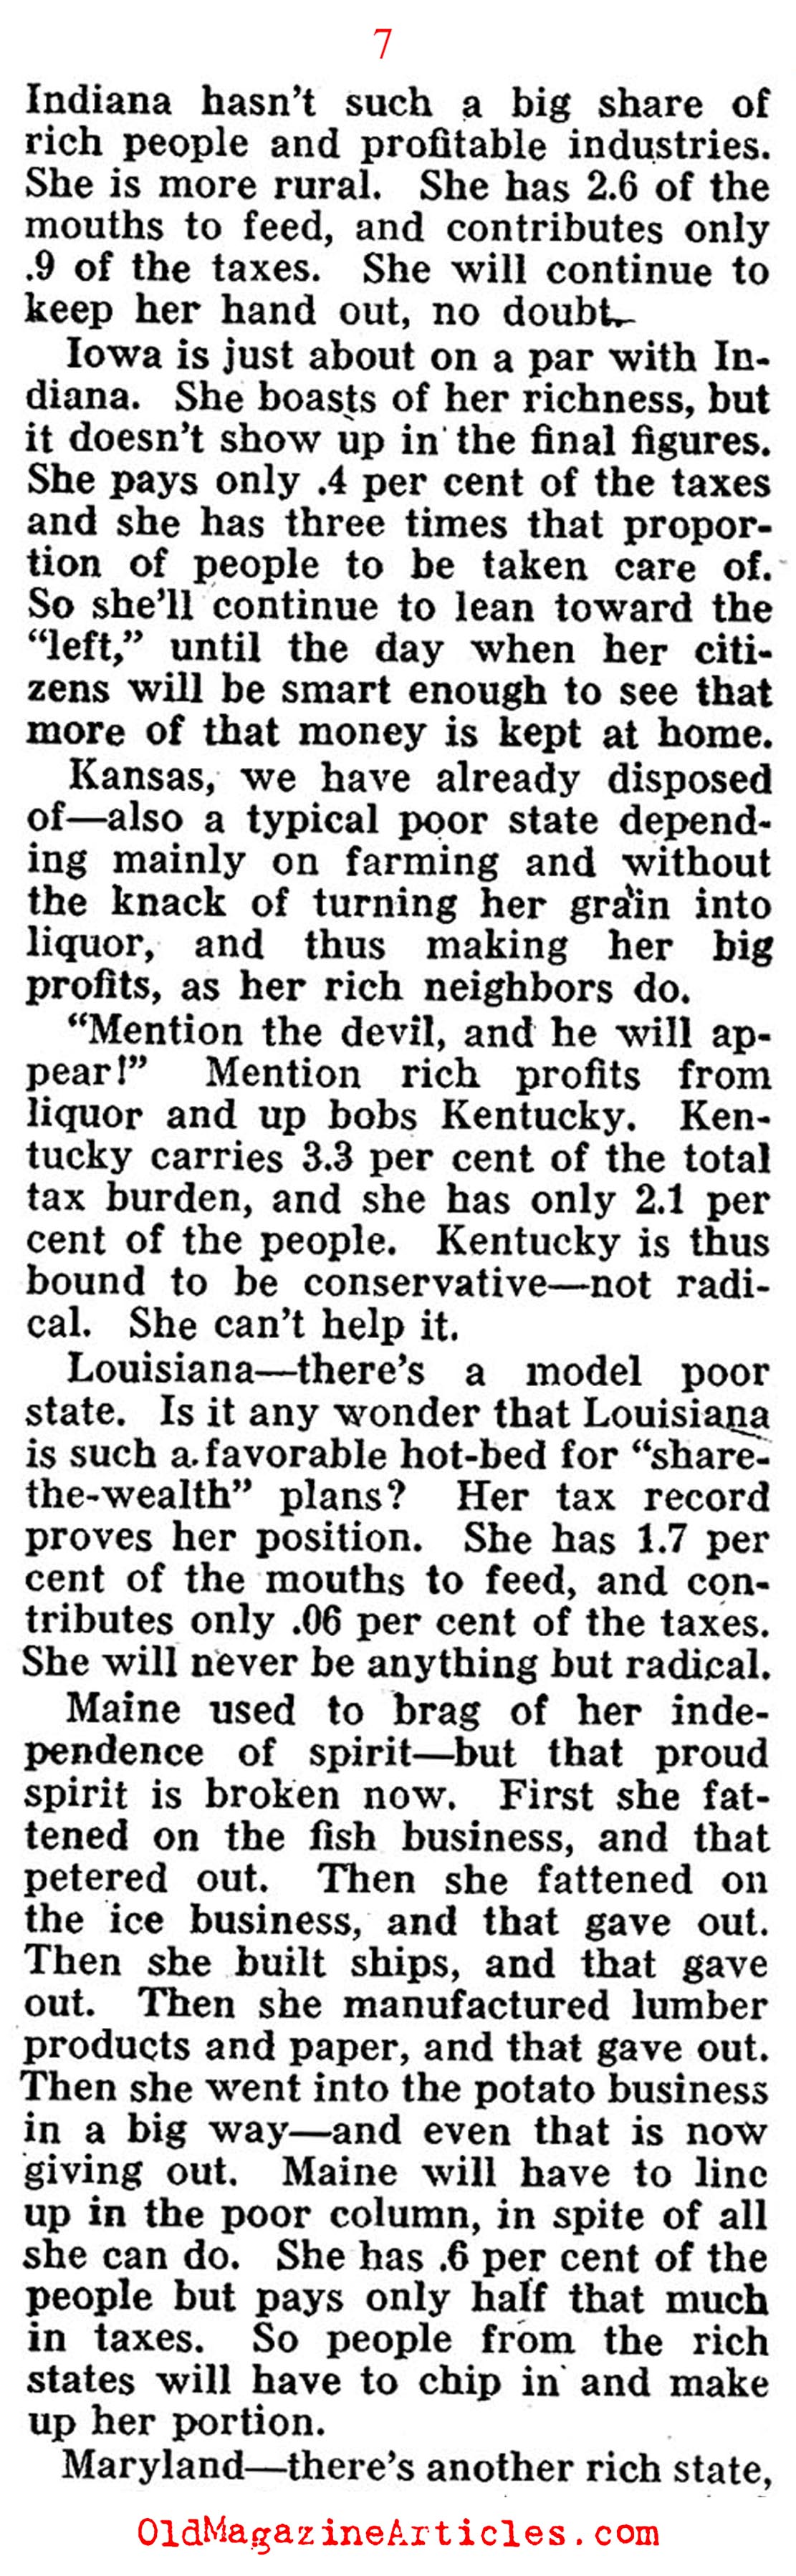 Soak the Rich States, Too (Pathfinder Magazine, 1935)